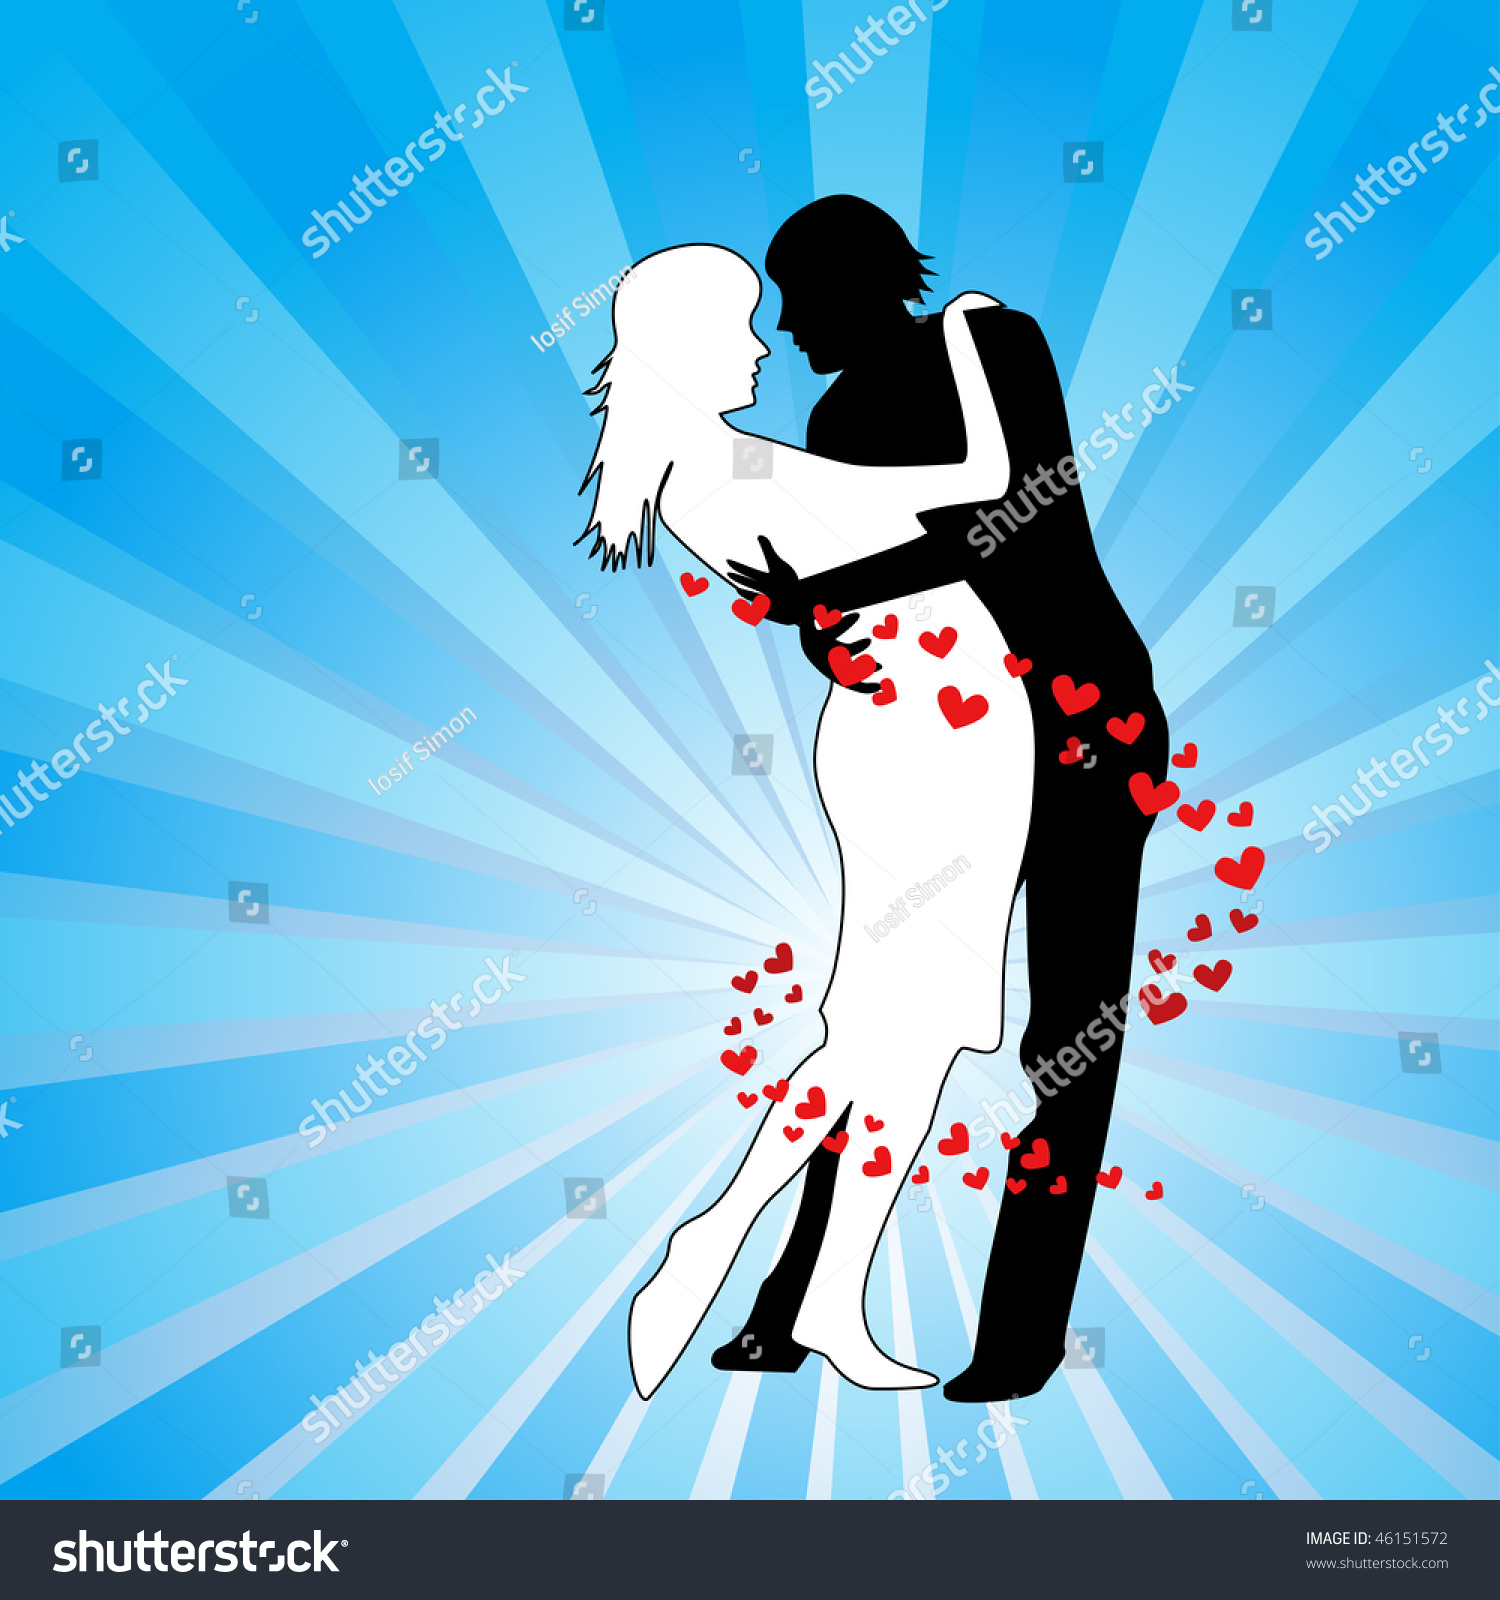 Two Lovers Kissing Vector Illustration - 46151572 : Shutterstock